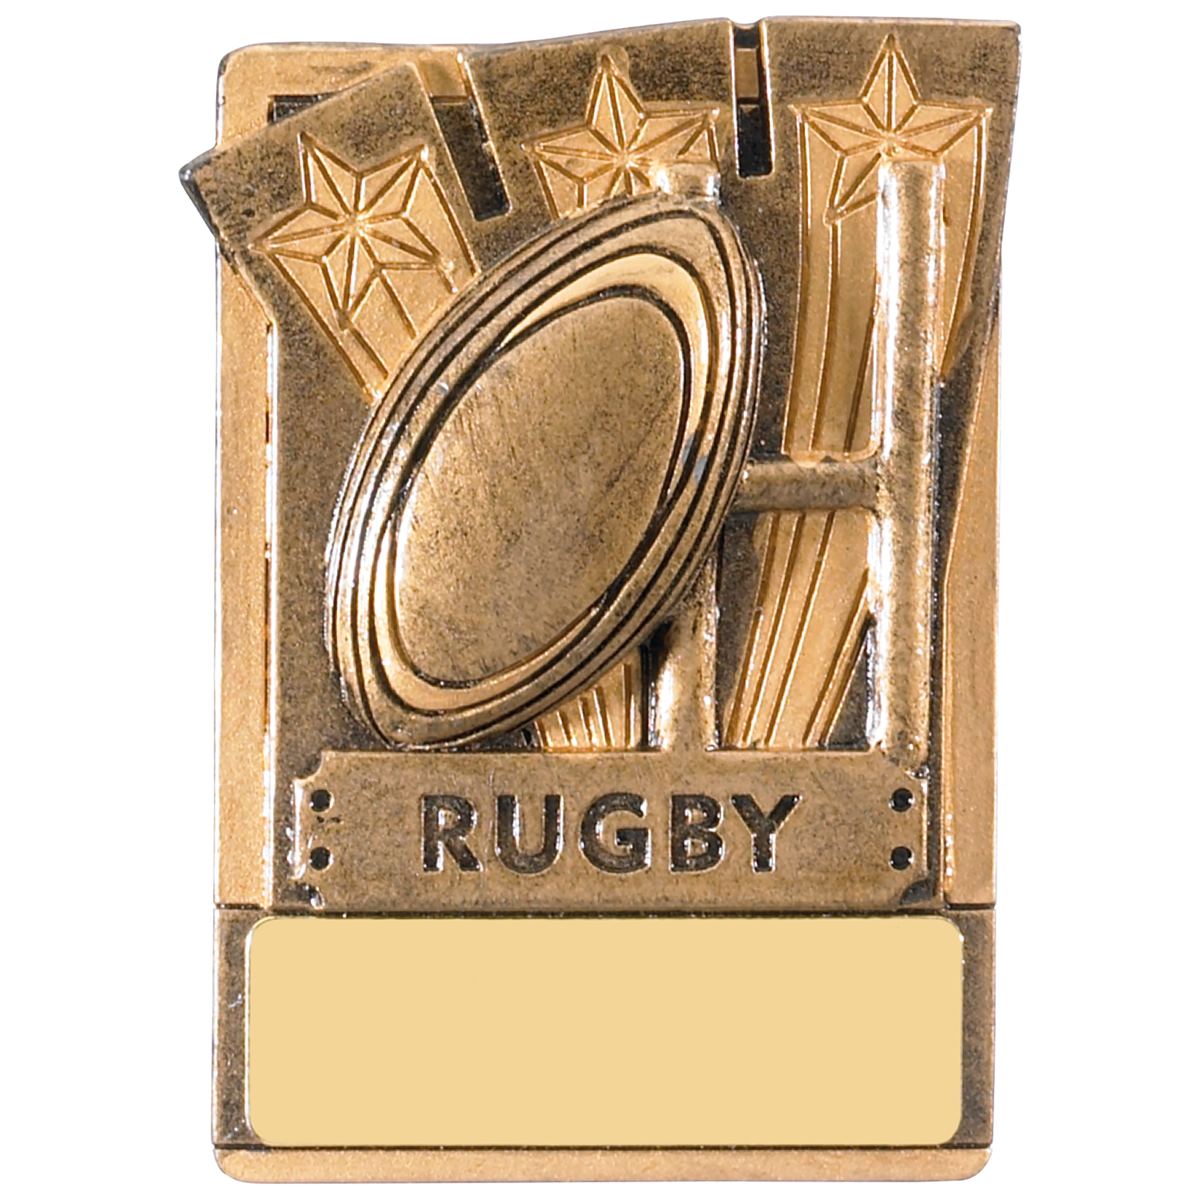 Rugby Fridge Magnet Award